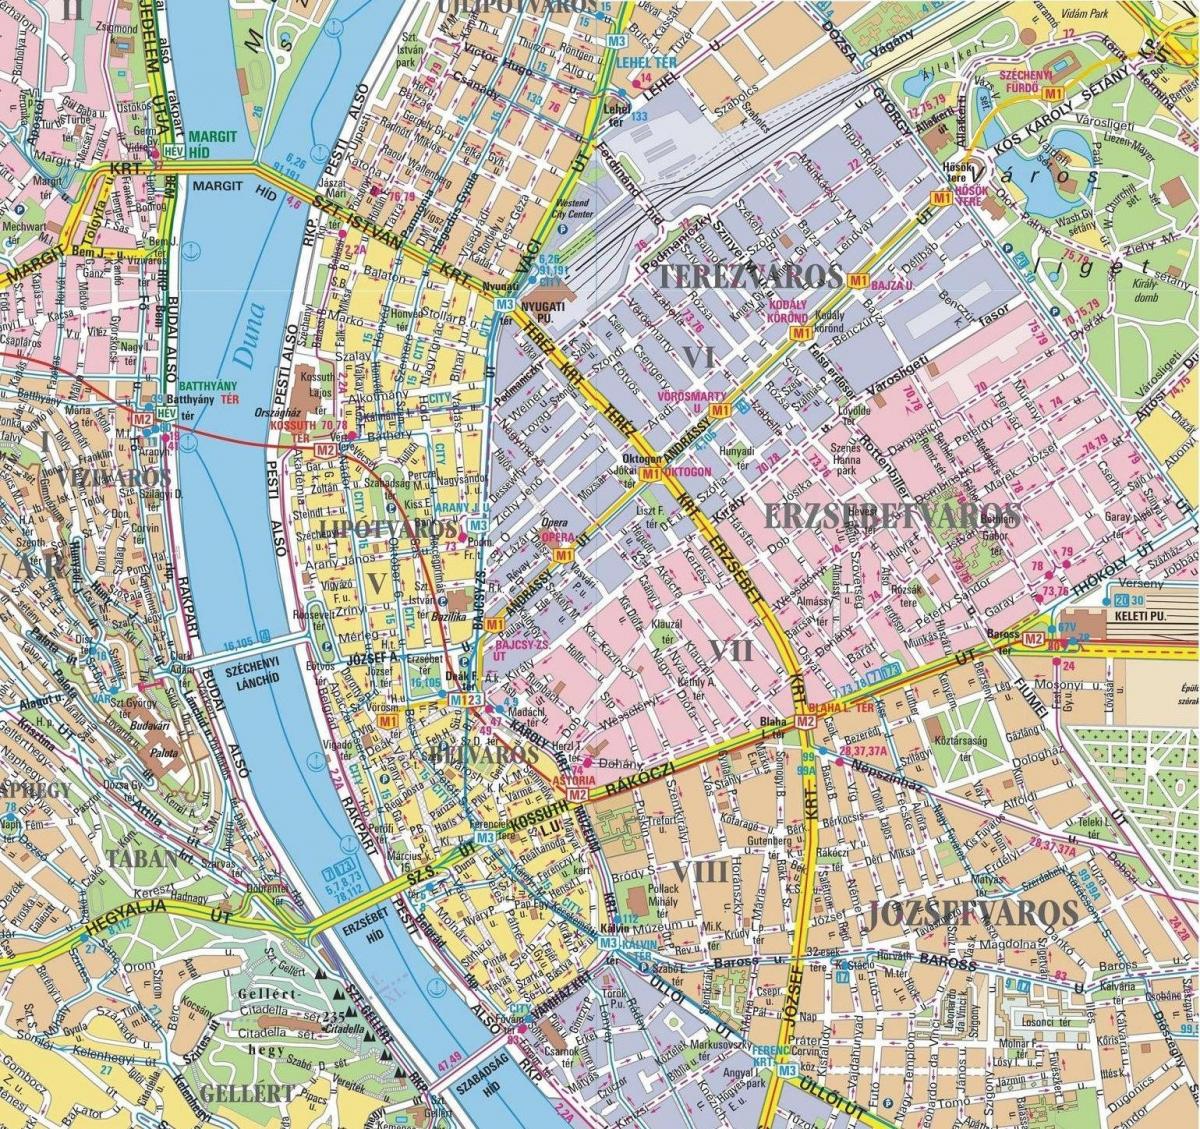 kart over bydeler i budapest